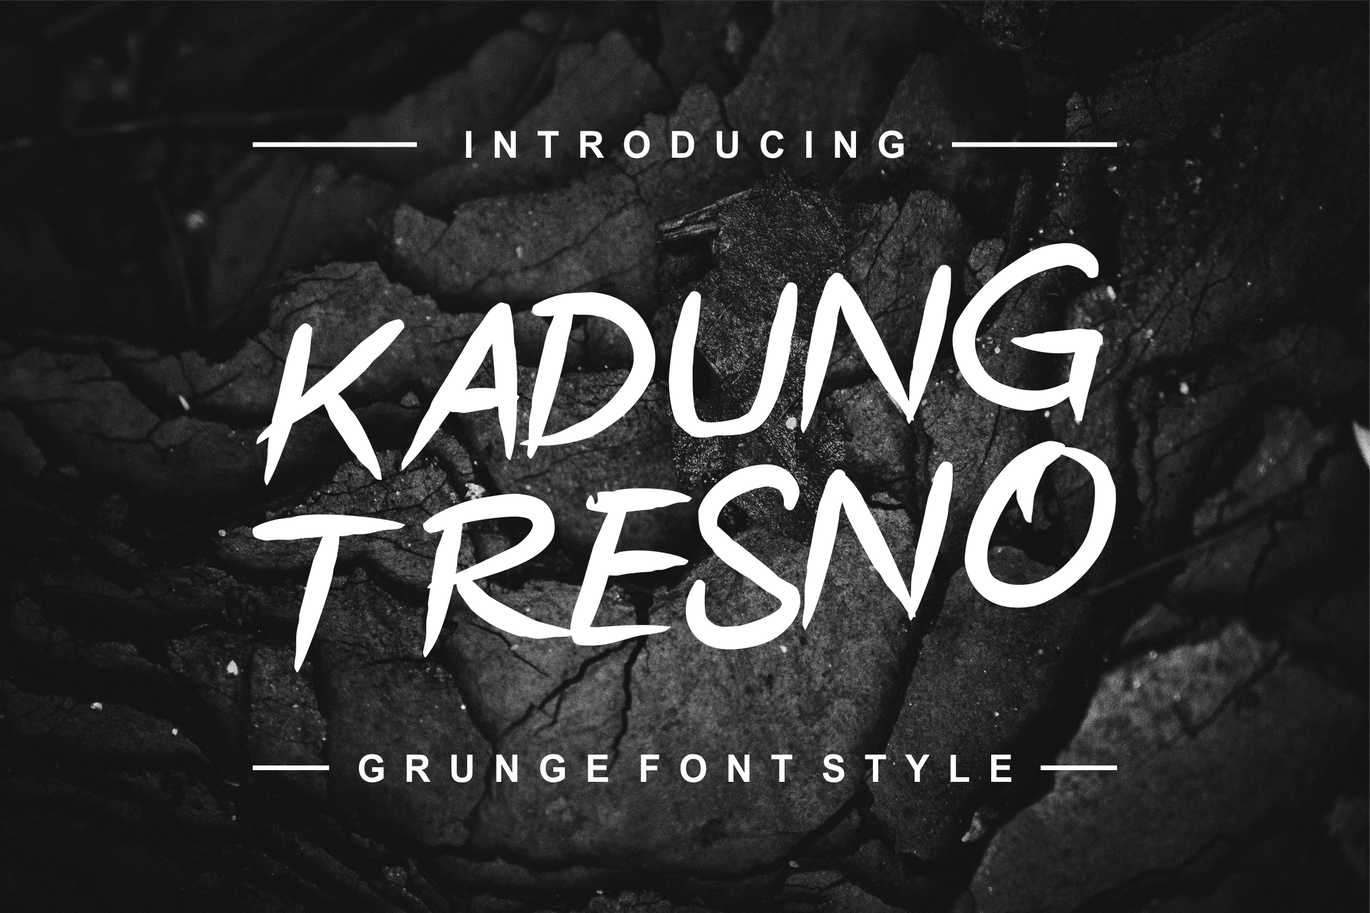 Grunge风格装饰性字体素材 Kadung Tresno Grunge Font Style 设计素材 第1张